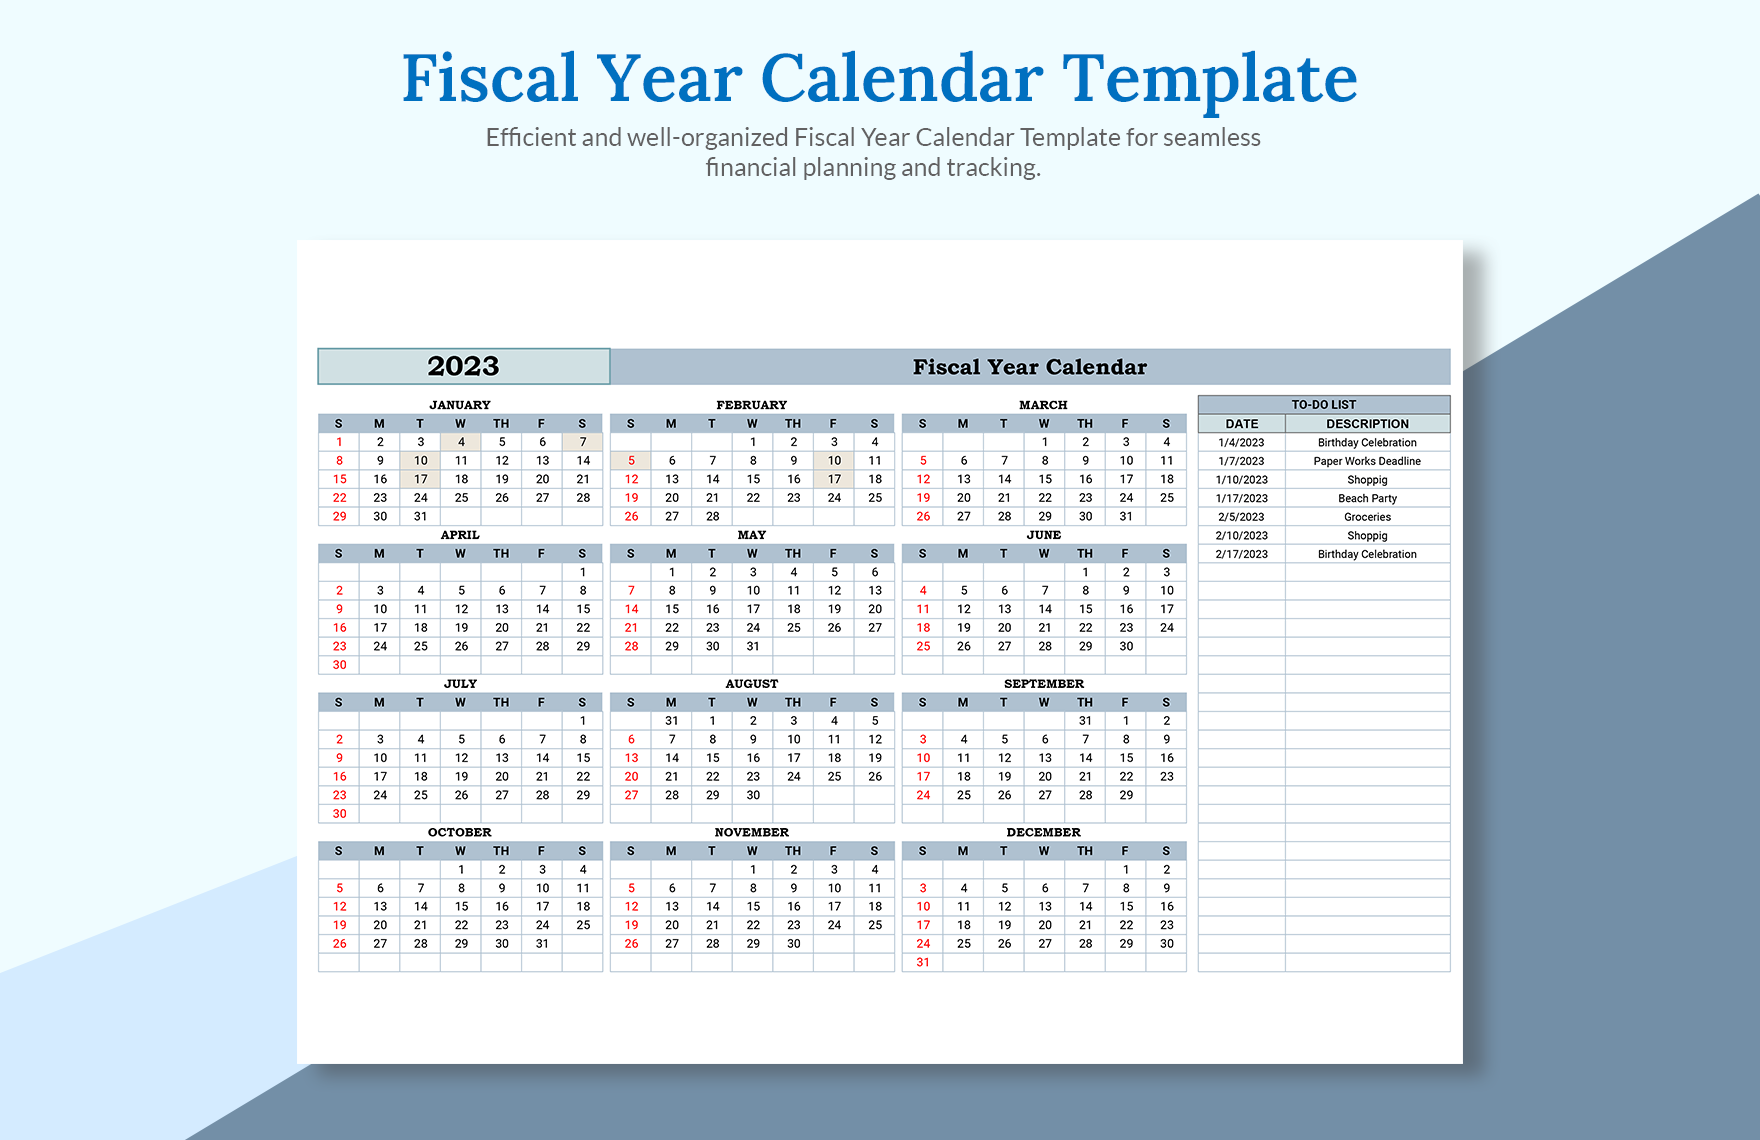 fiscal-year-calendar